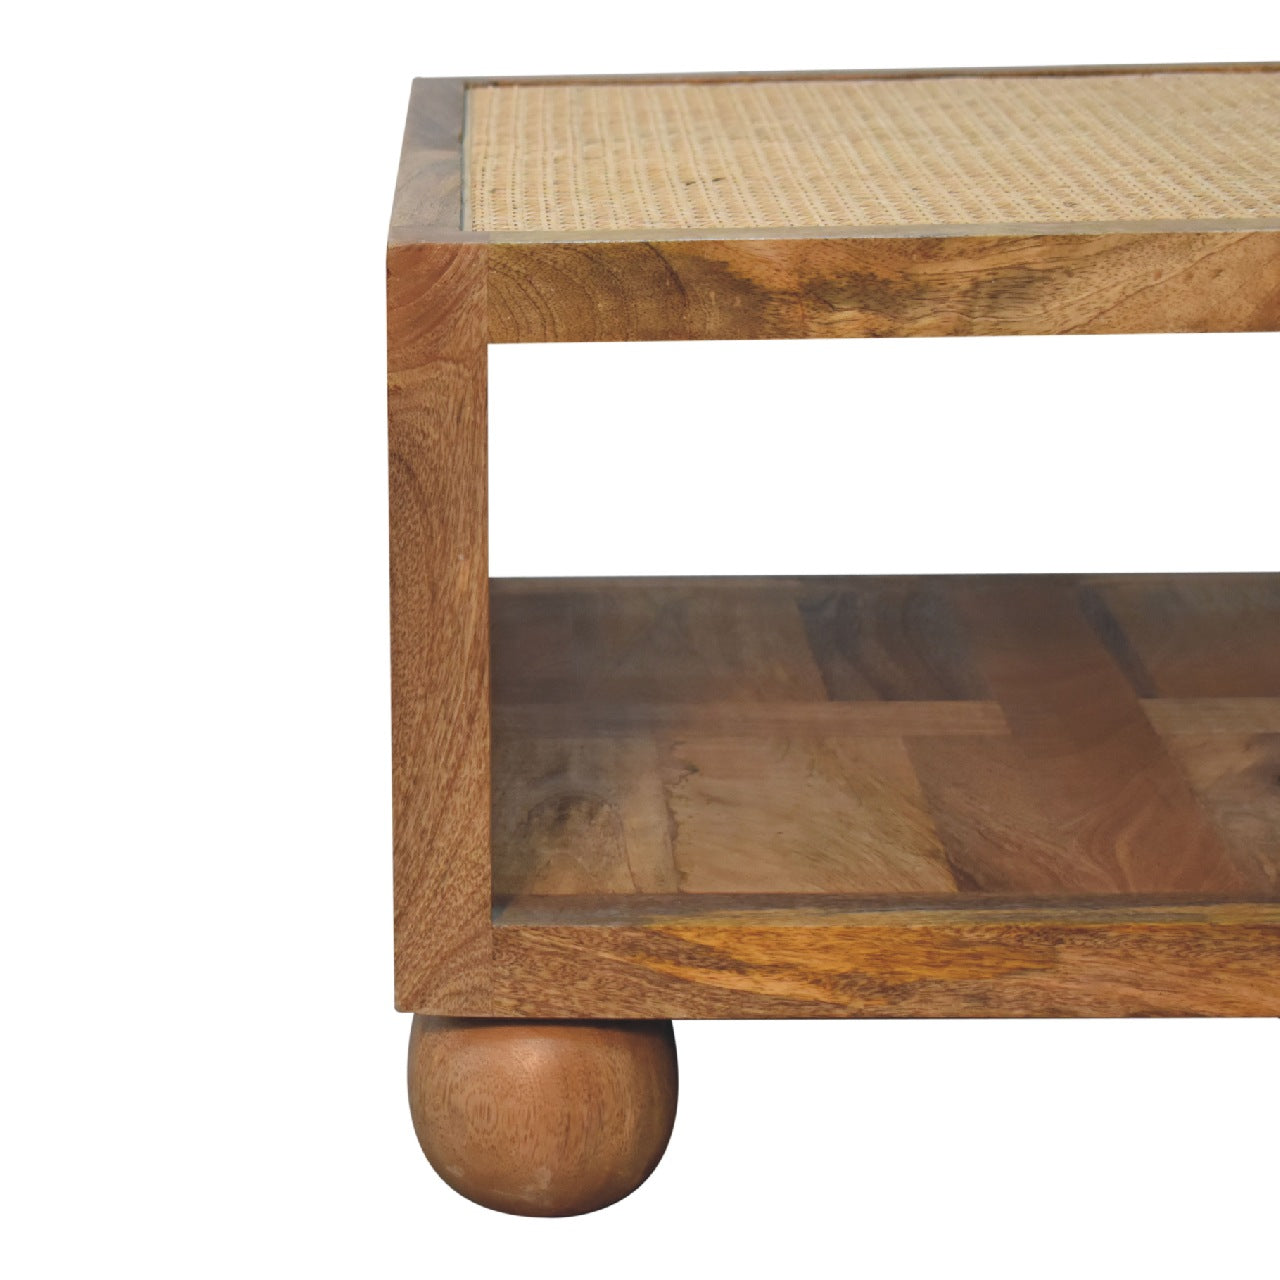 small rattan coffee table